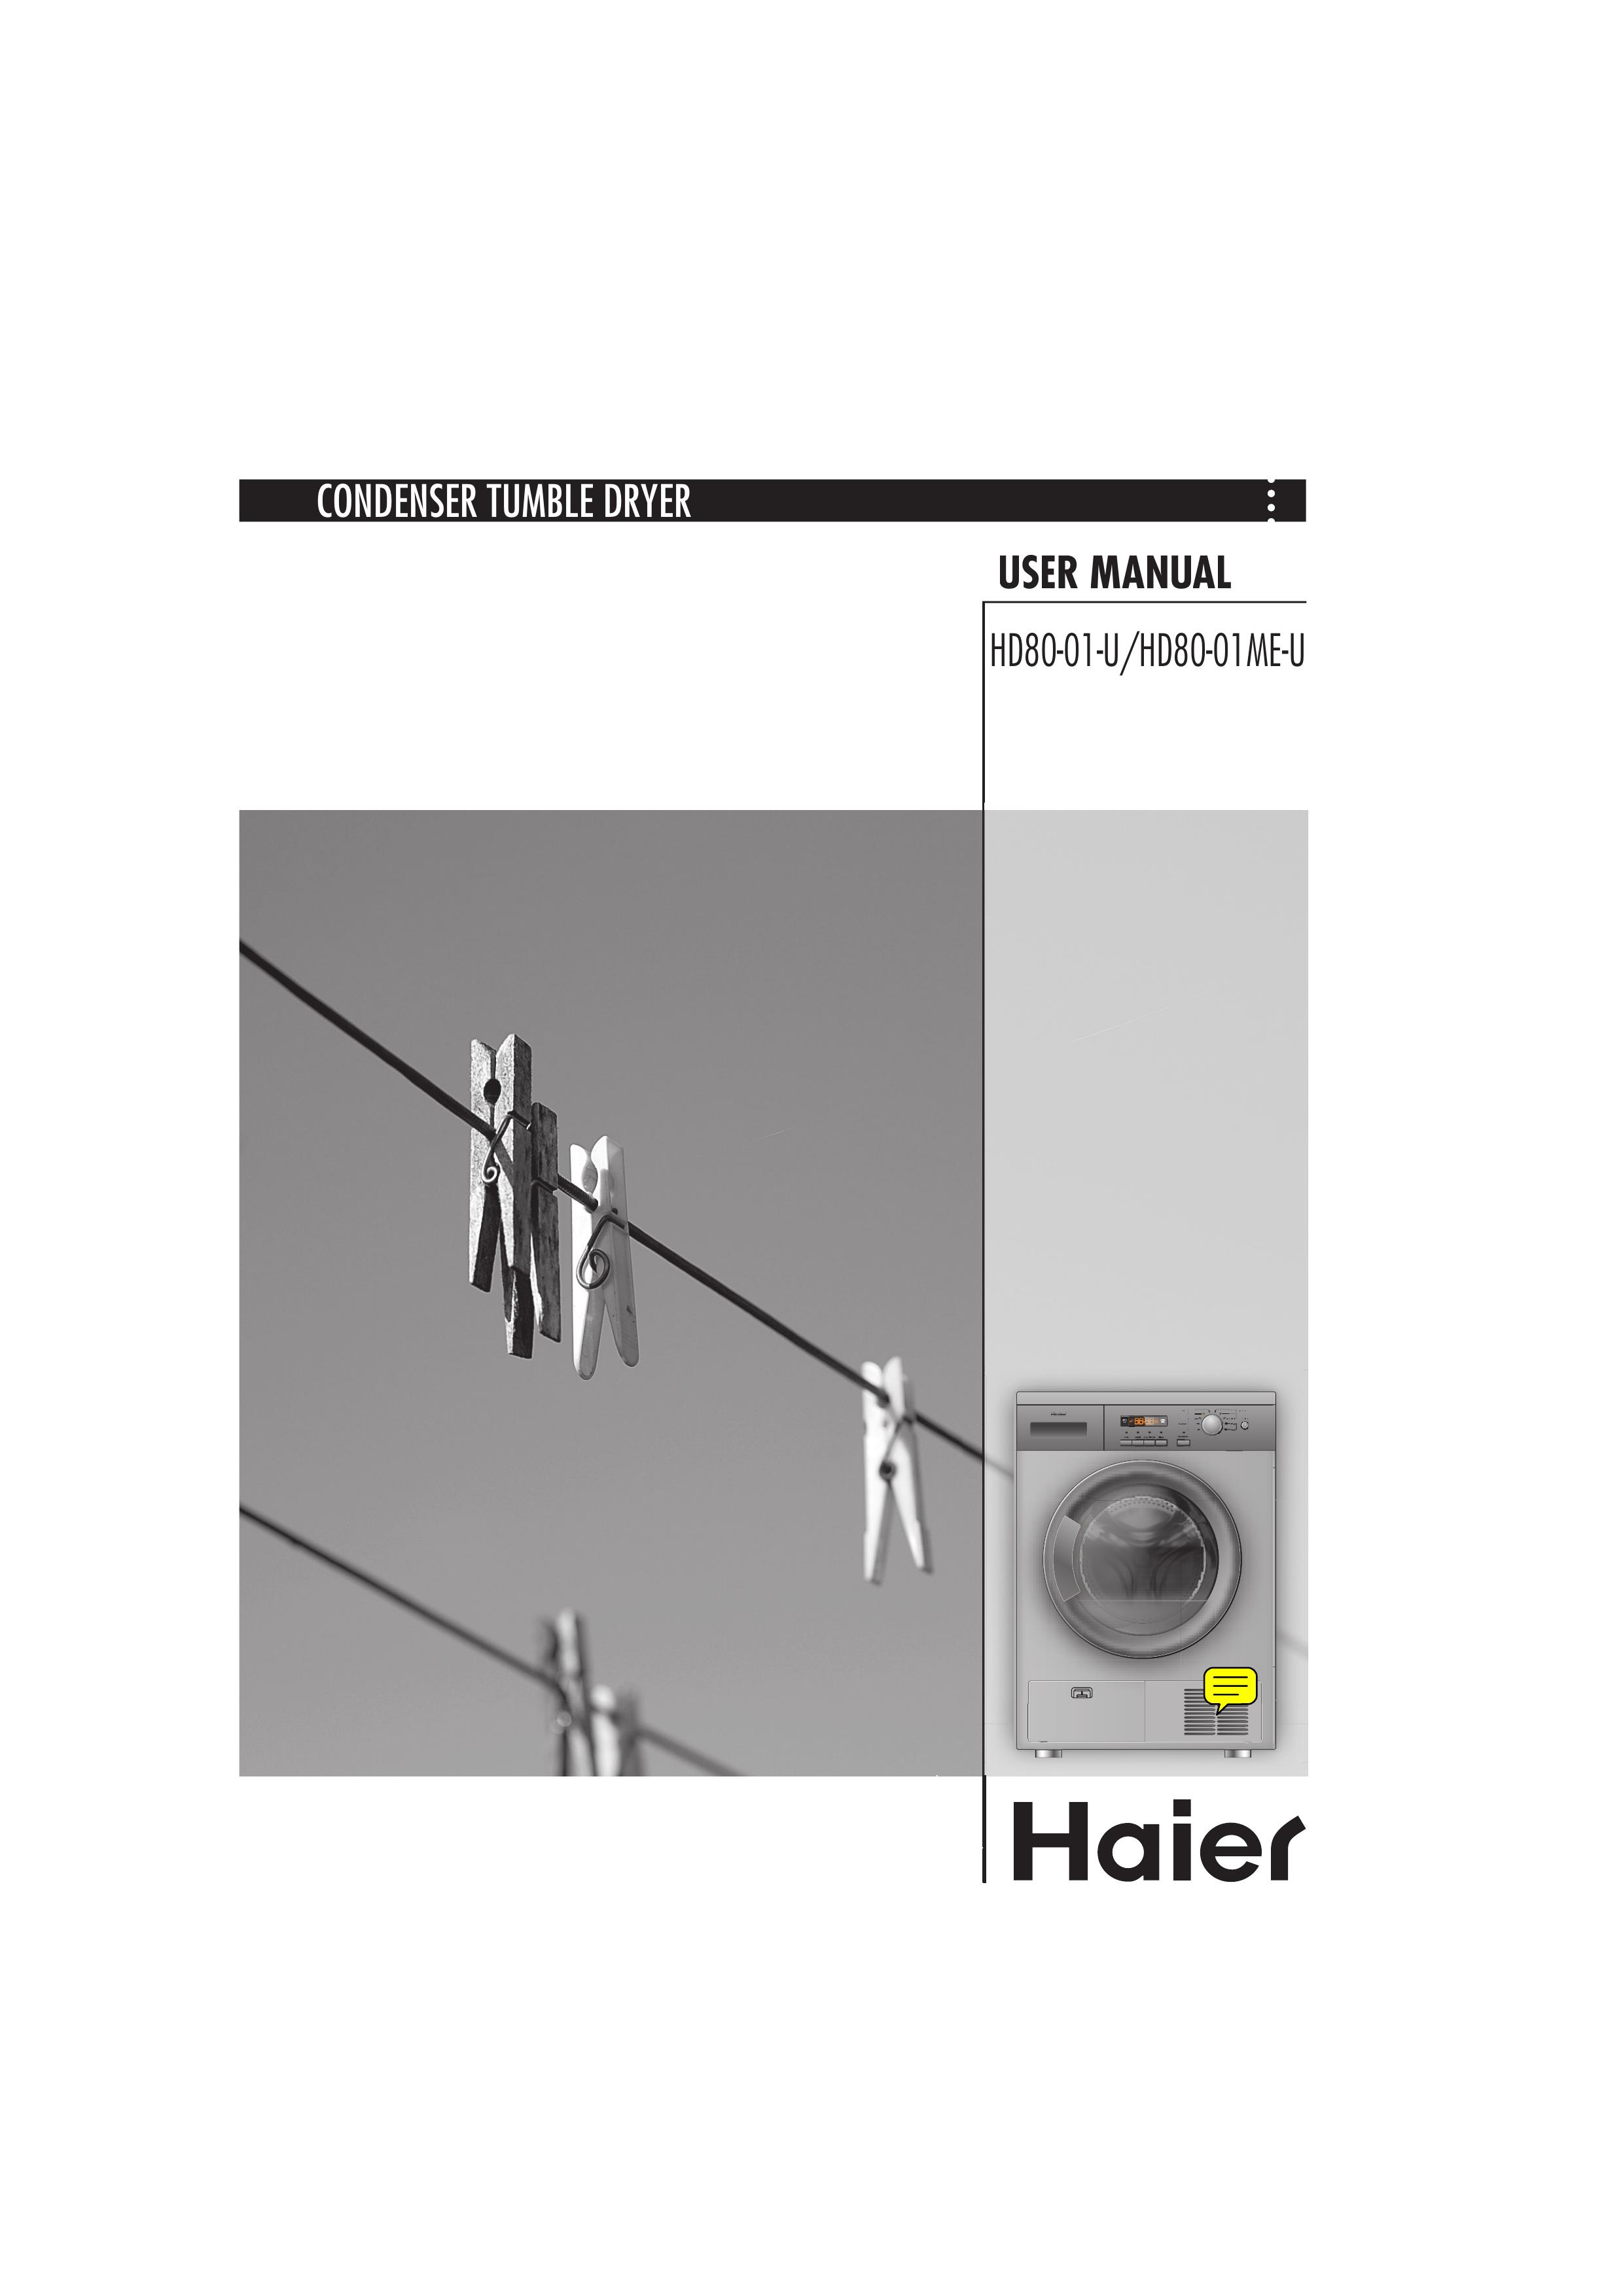 Haier HD80-01-U Clothes Dryer User Manual